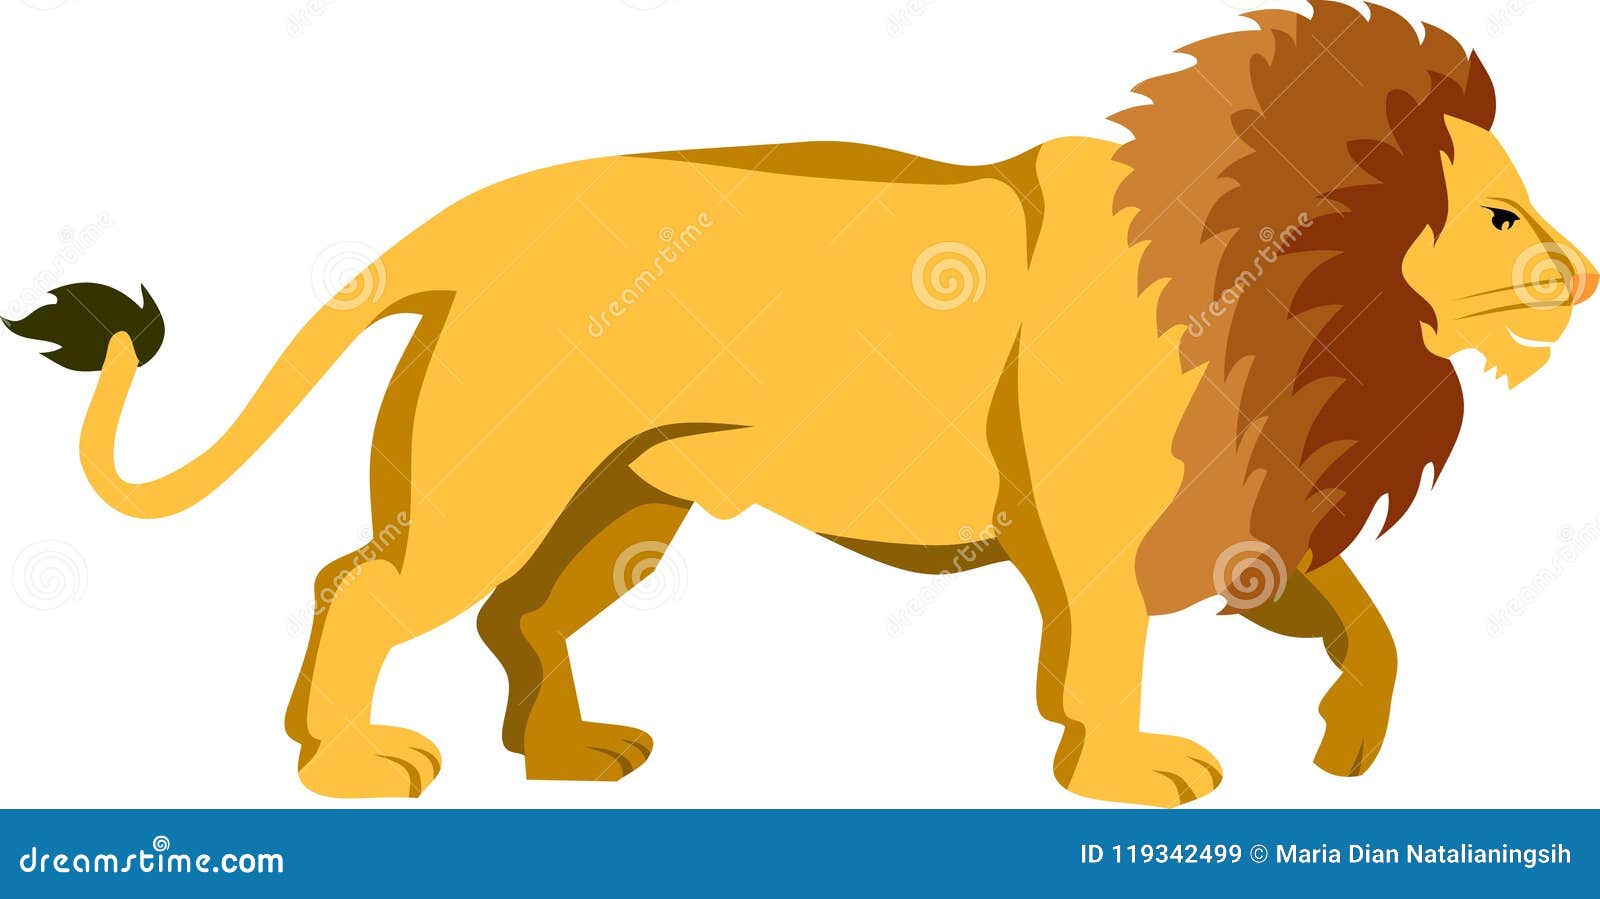 The Walking Lion Mammal Animal Stock Vector - Illustration of vector ...